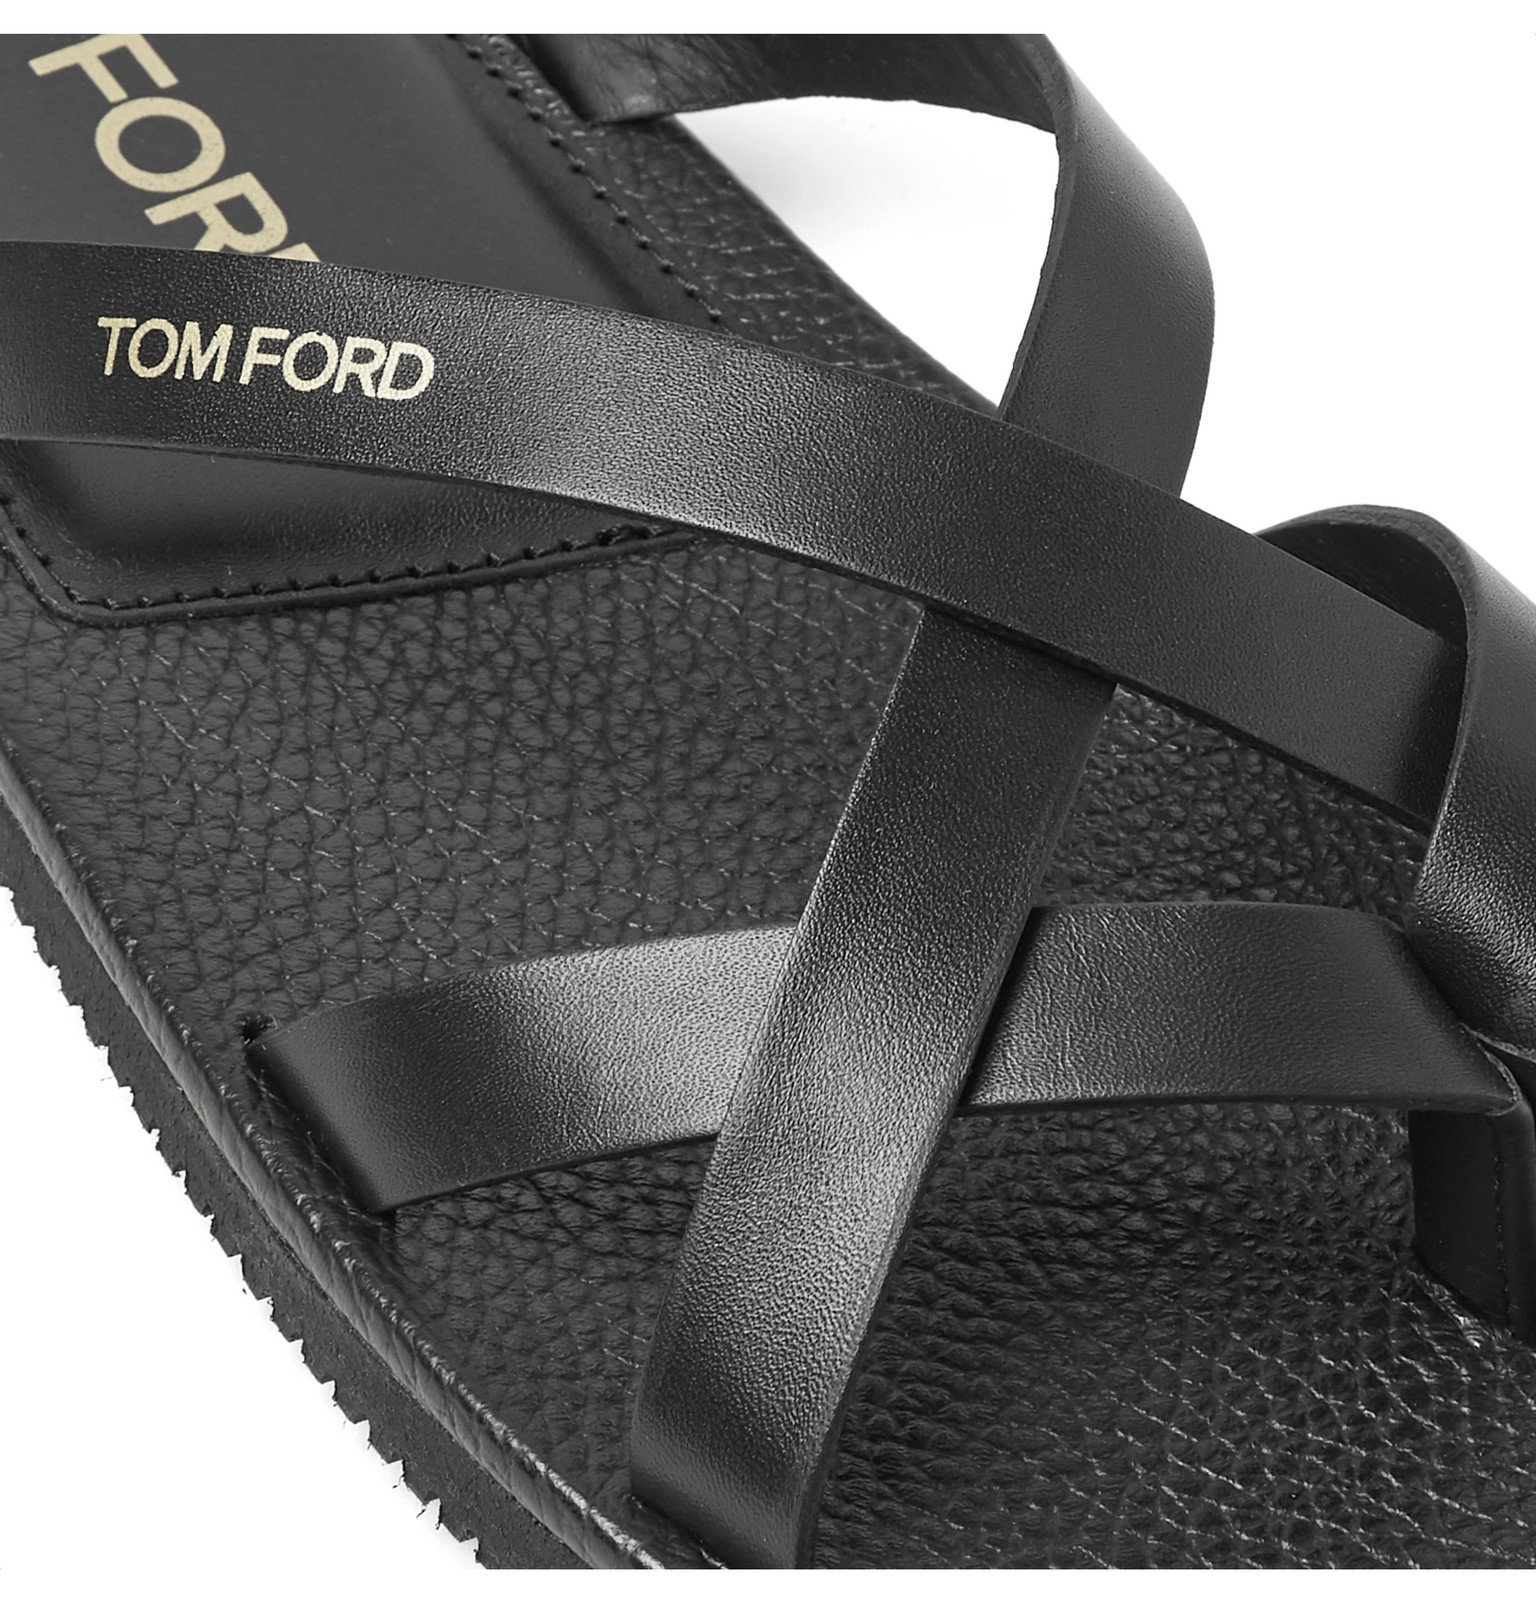 TOM FORD - Seafield Leather Sandals - Black TOM FORD